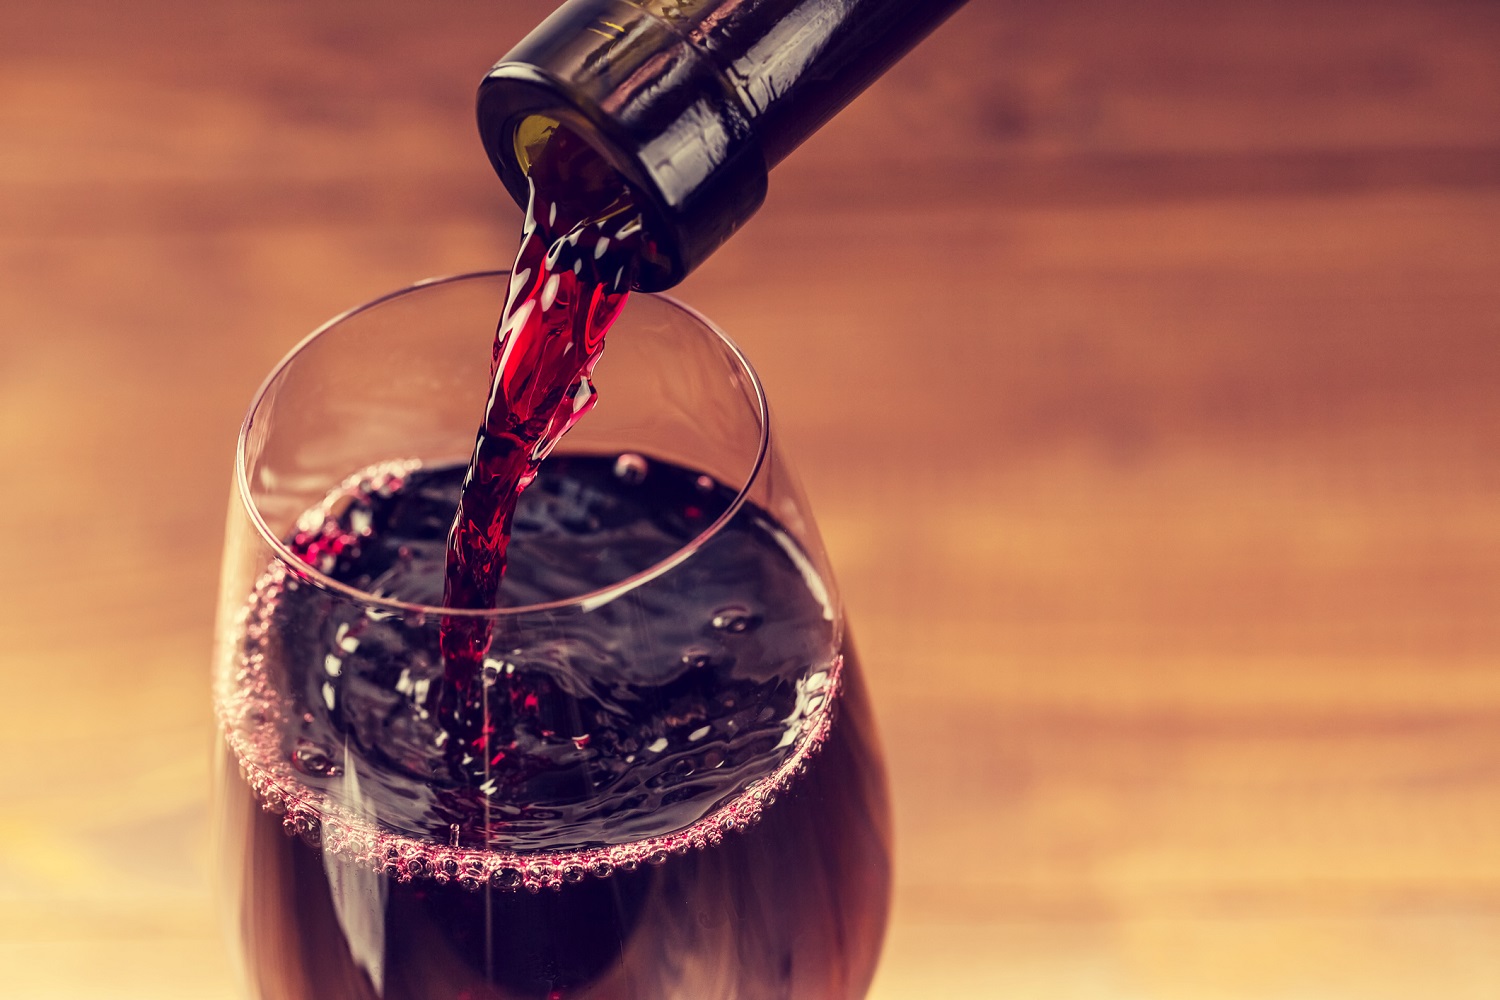 Enjoy a glass of Cabernet Sauvignon at Chimney Rock Winery